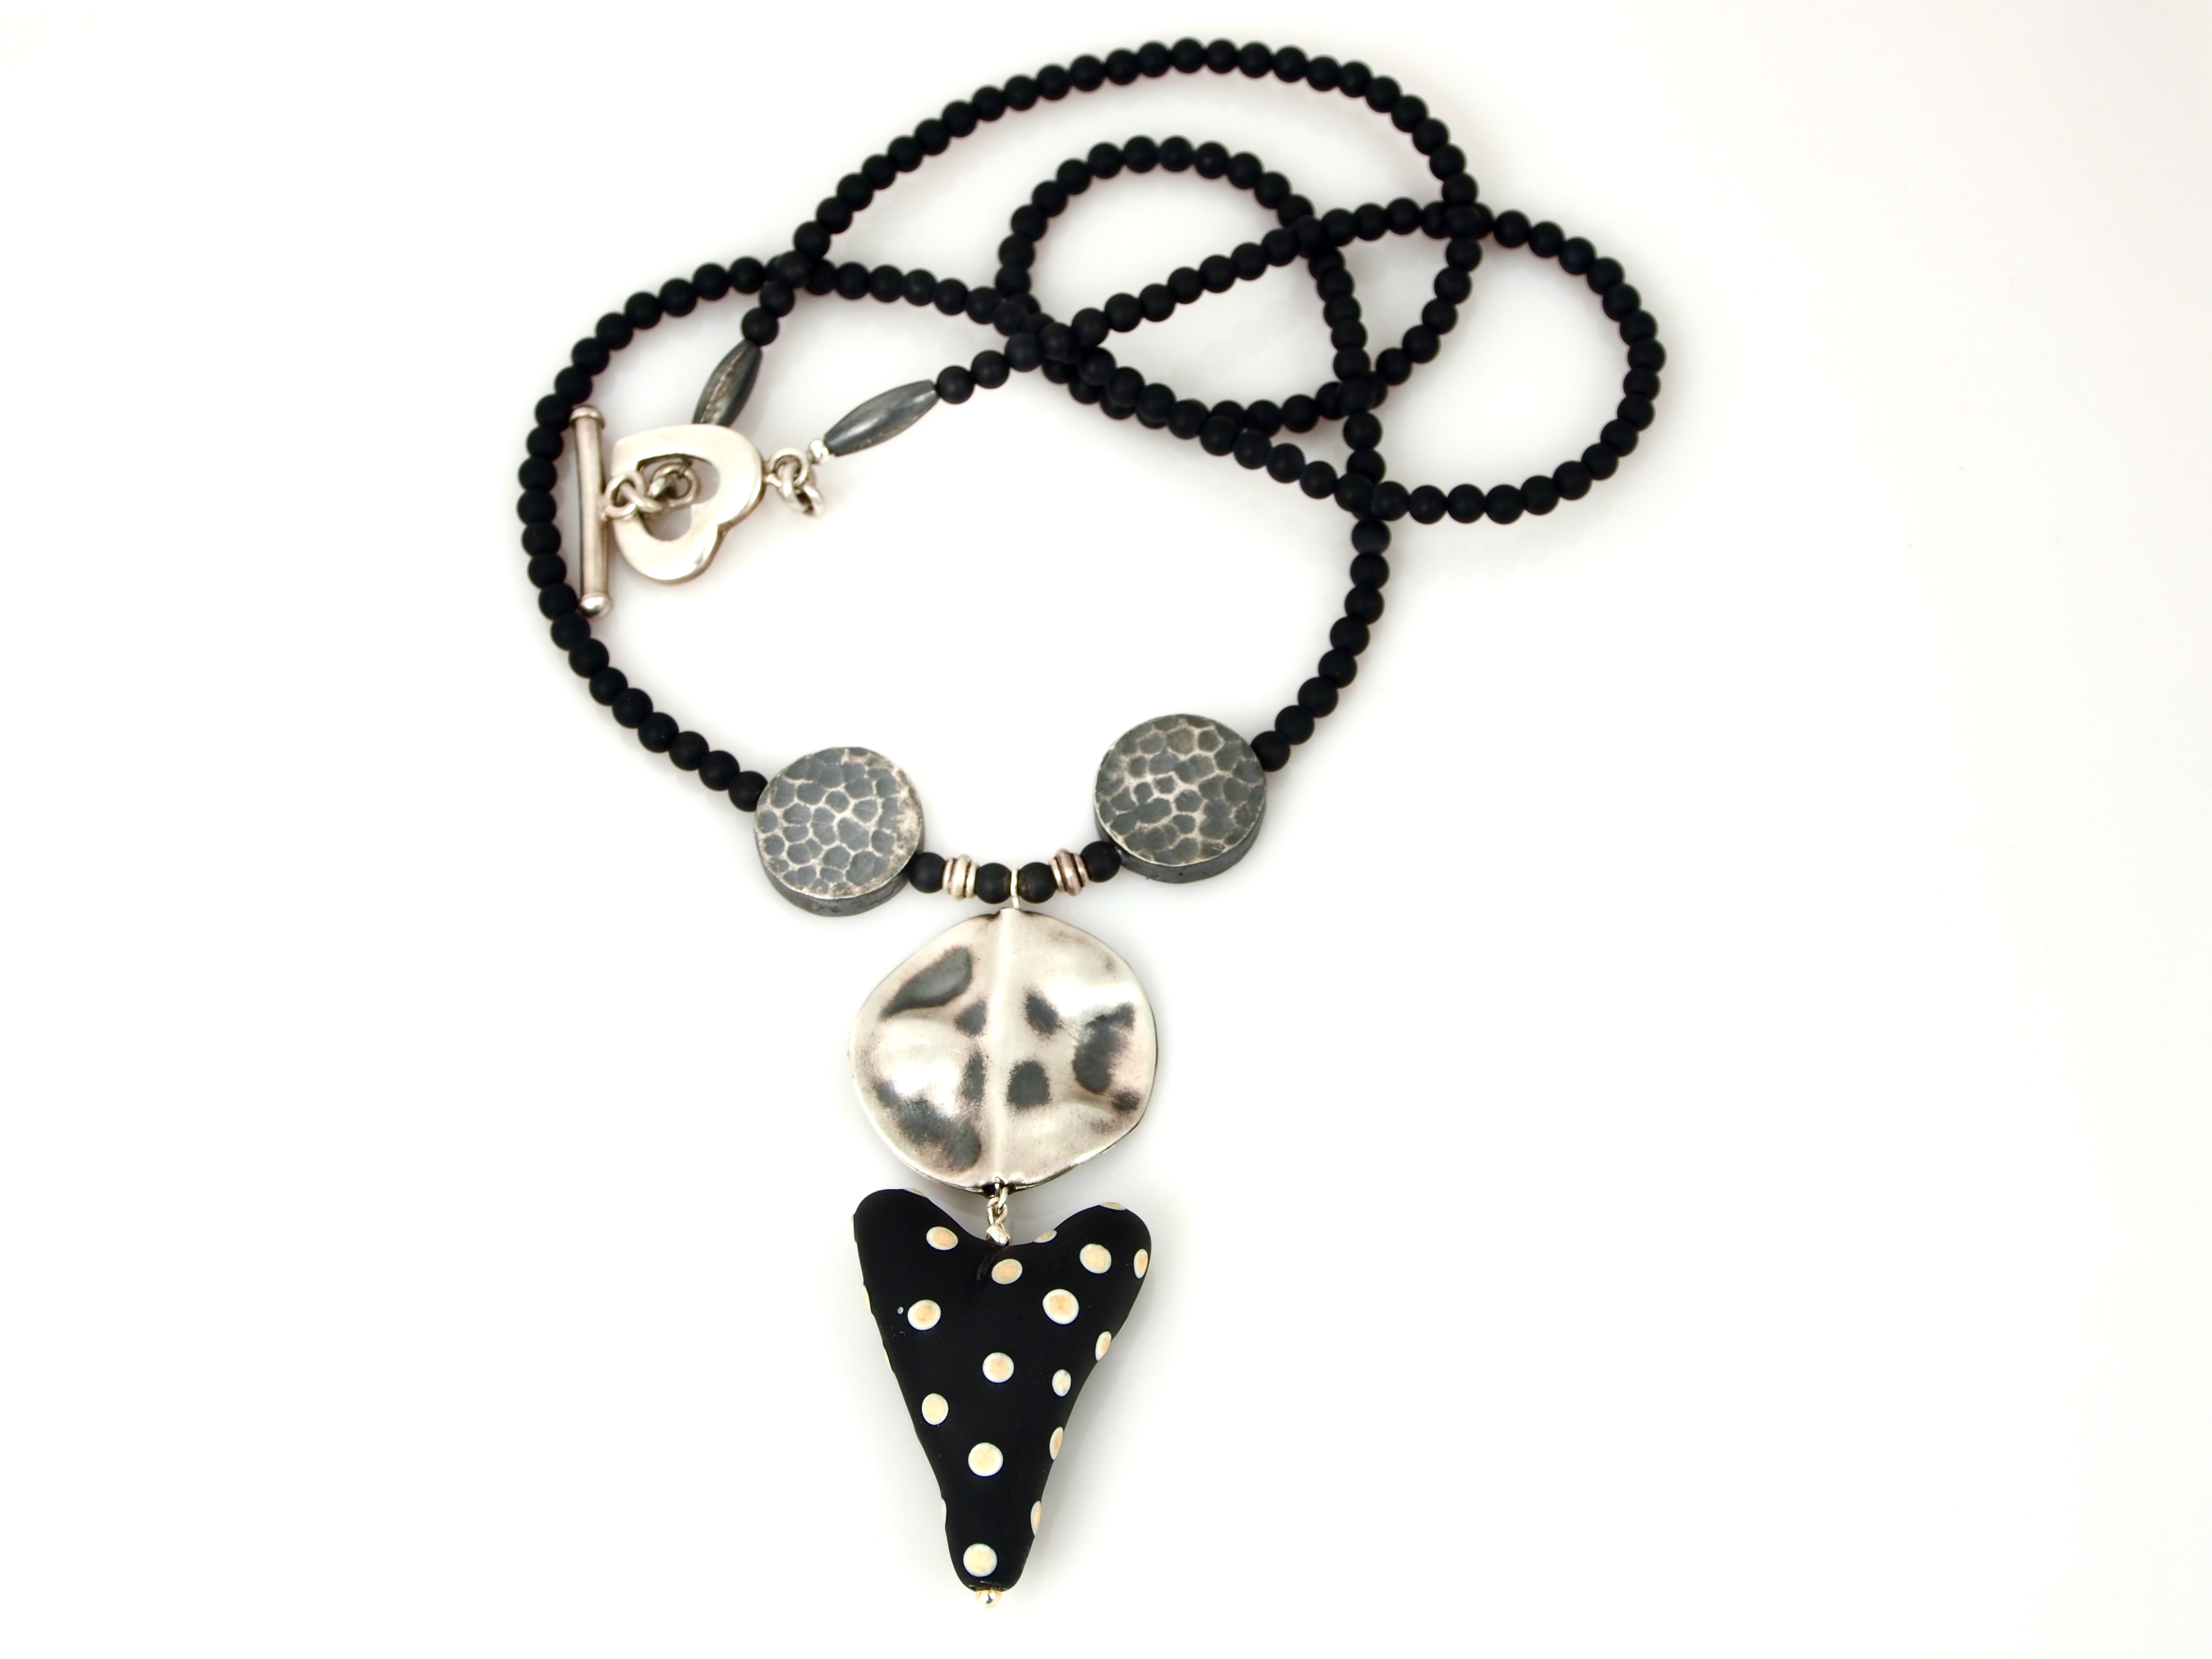 Polka Dot Heart Necklace - Oxidized Silver, Onyx and Handmade Antique Glass Polka Dot Heart Bead from Italy, 30